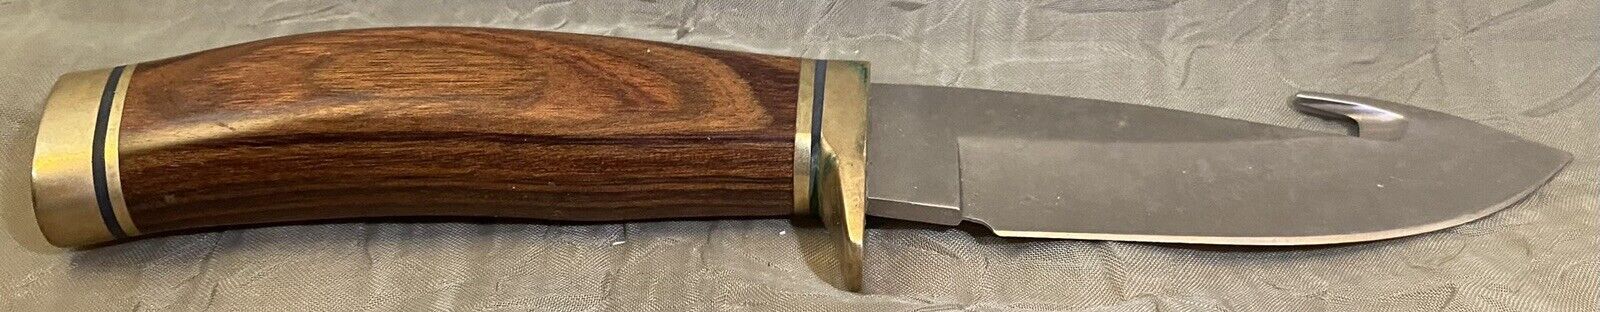 1995 NIB Buck Zipper Knife 191 4.25” Blade, Wood Brass Handle,  Leather Sheath